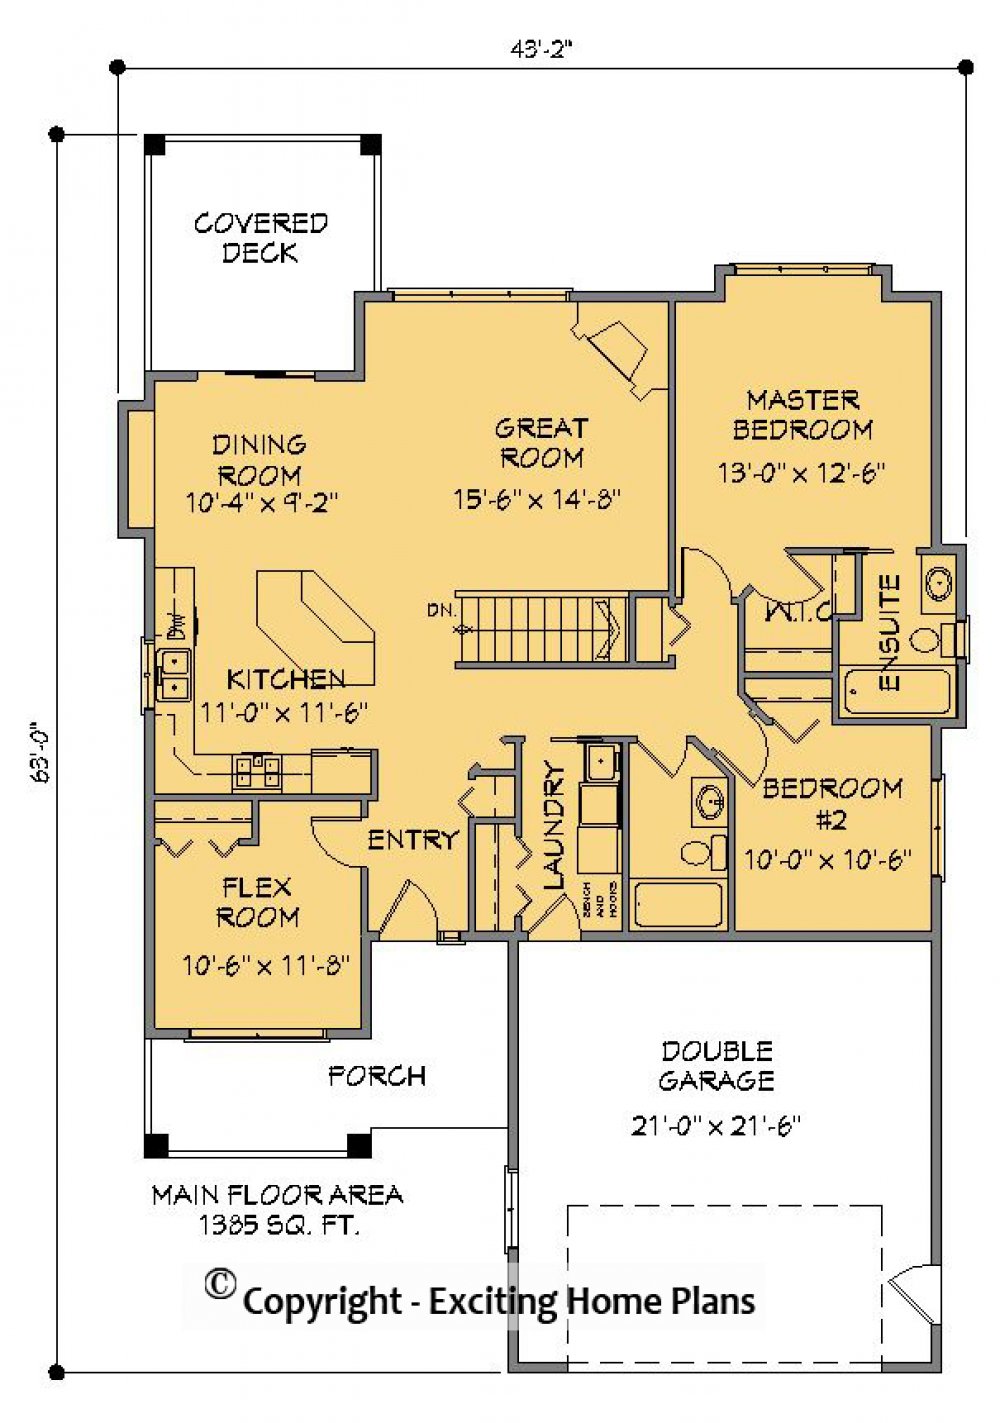 House Plan E1575-10  Main Floor Plan